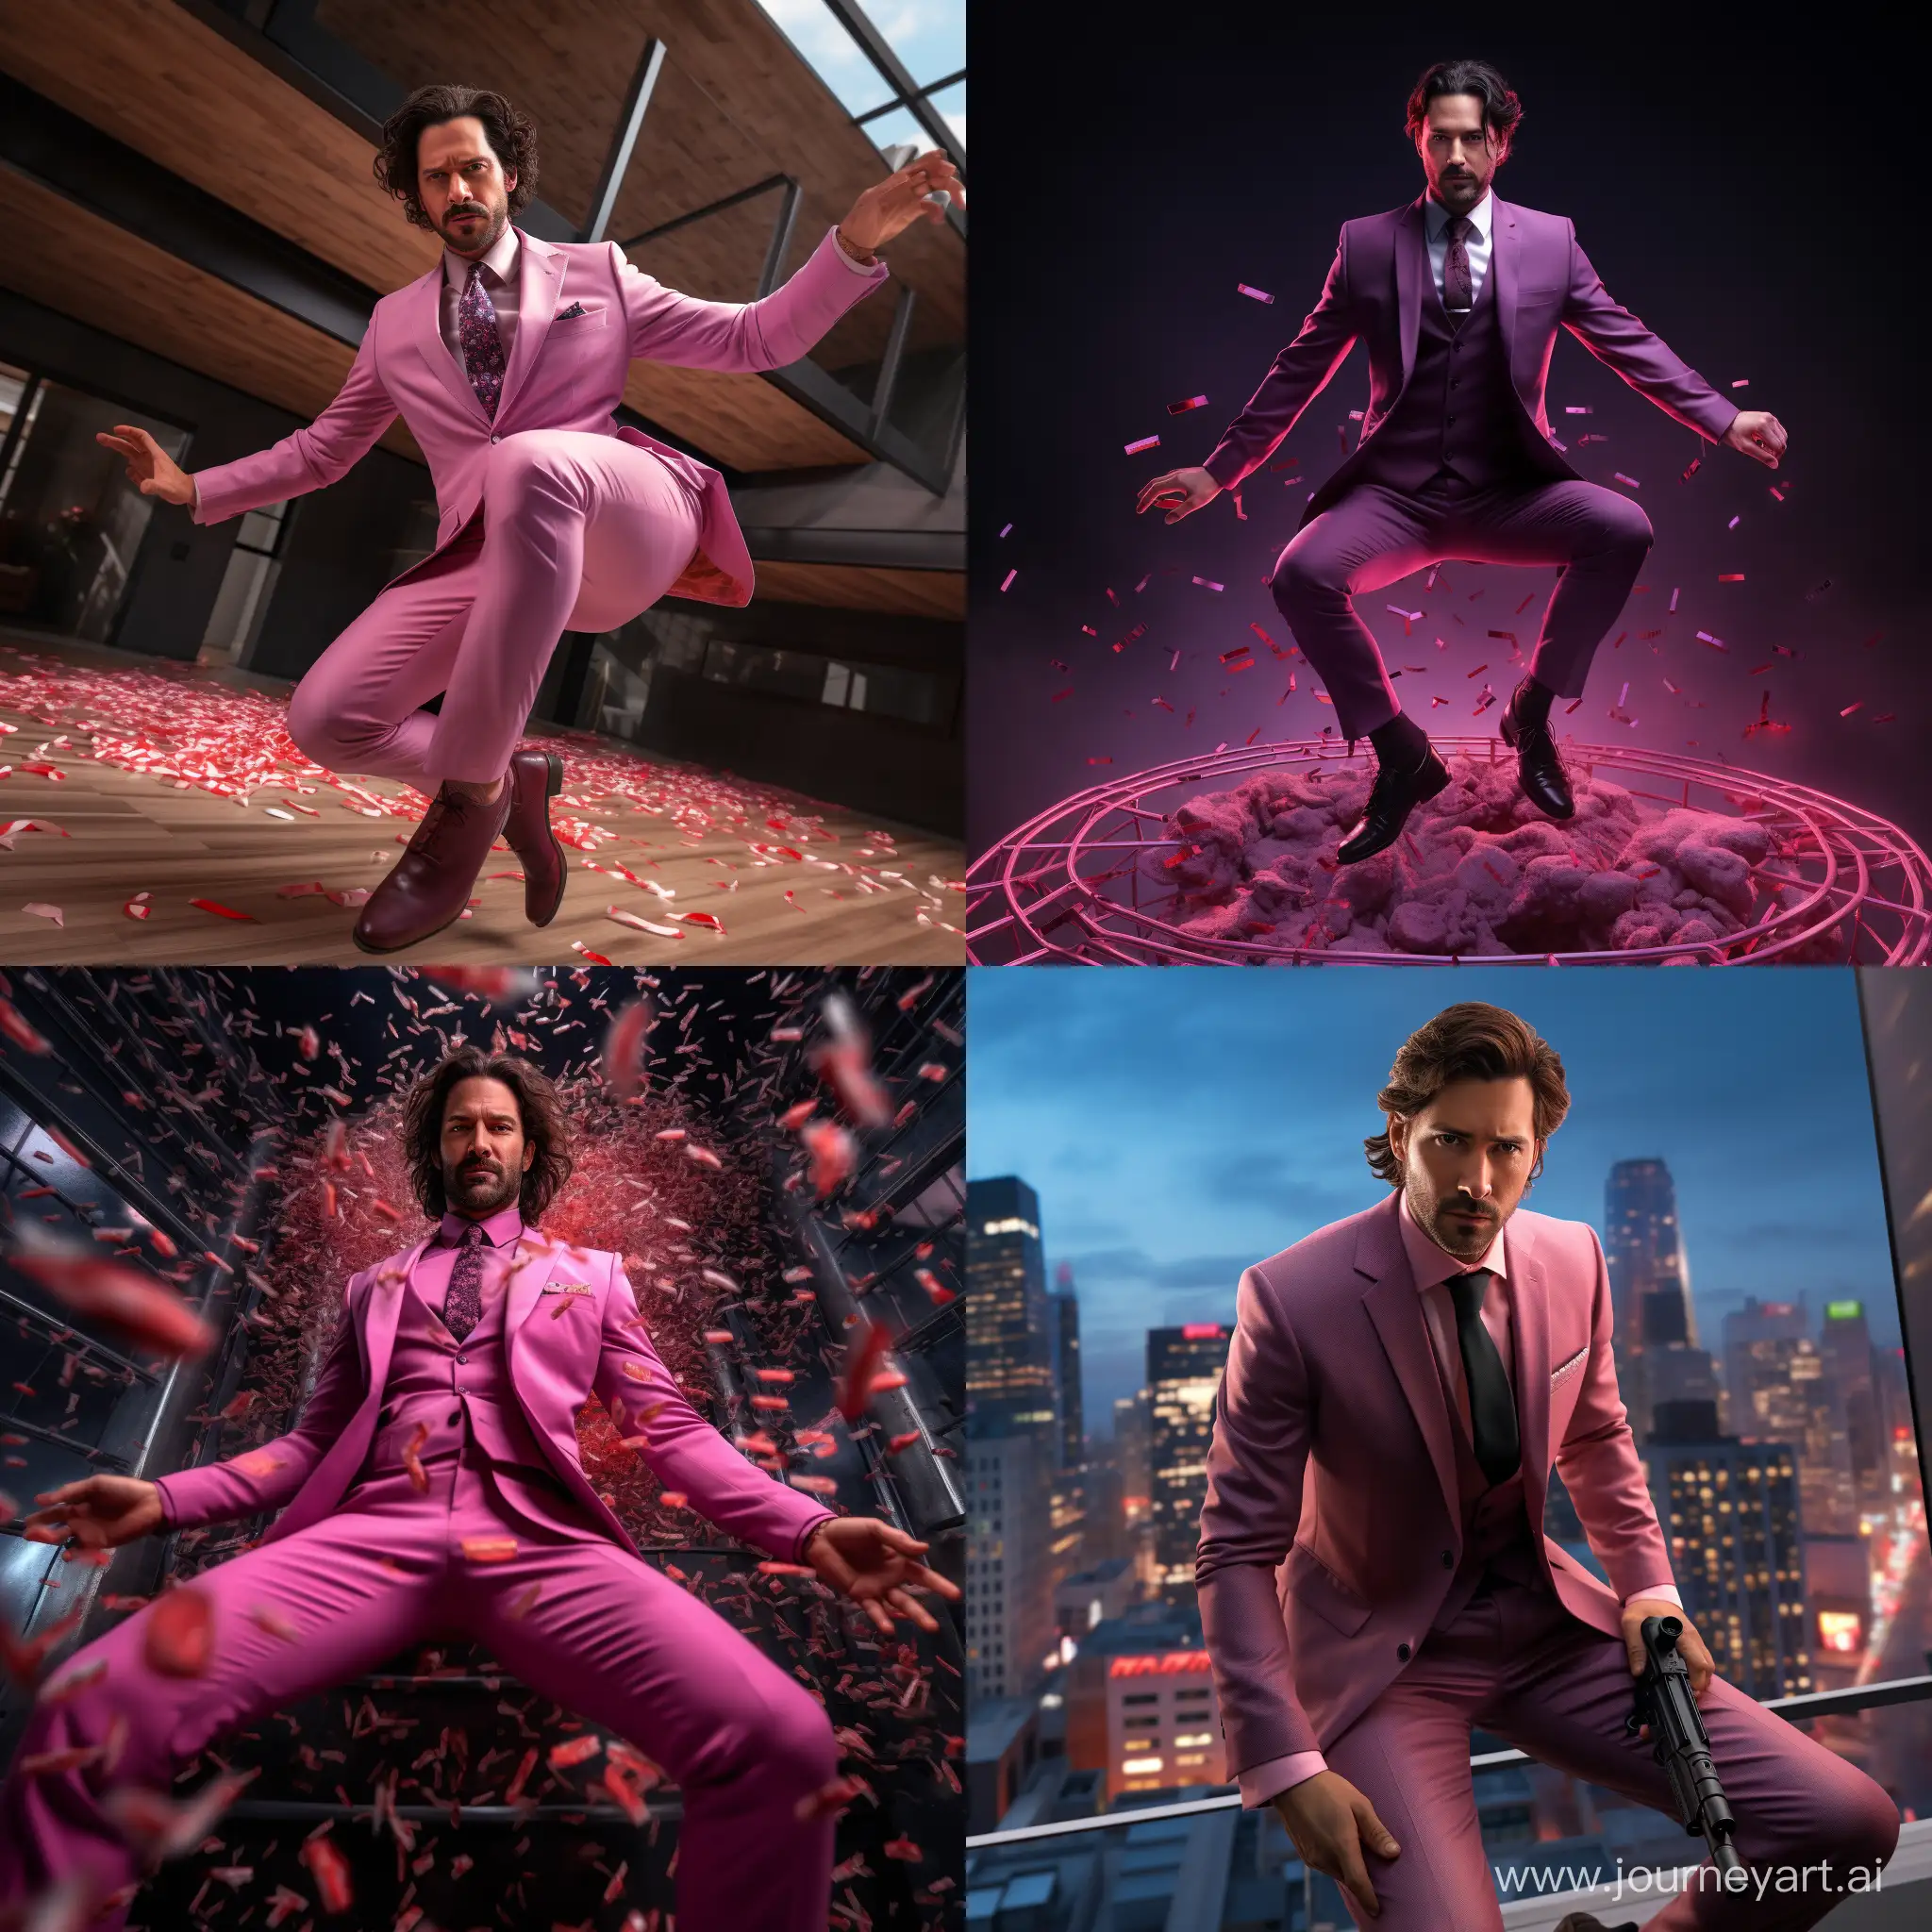 John-Wick-Ballerina-in-Stunning-Pink-Suit-4K-HD-Image